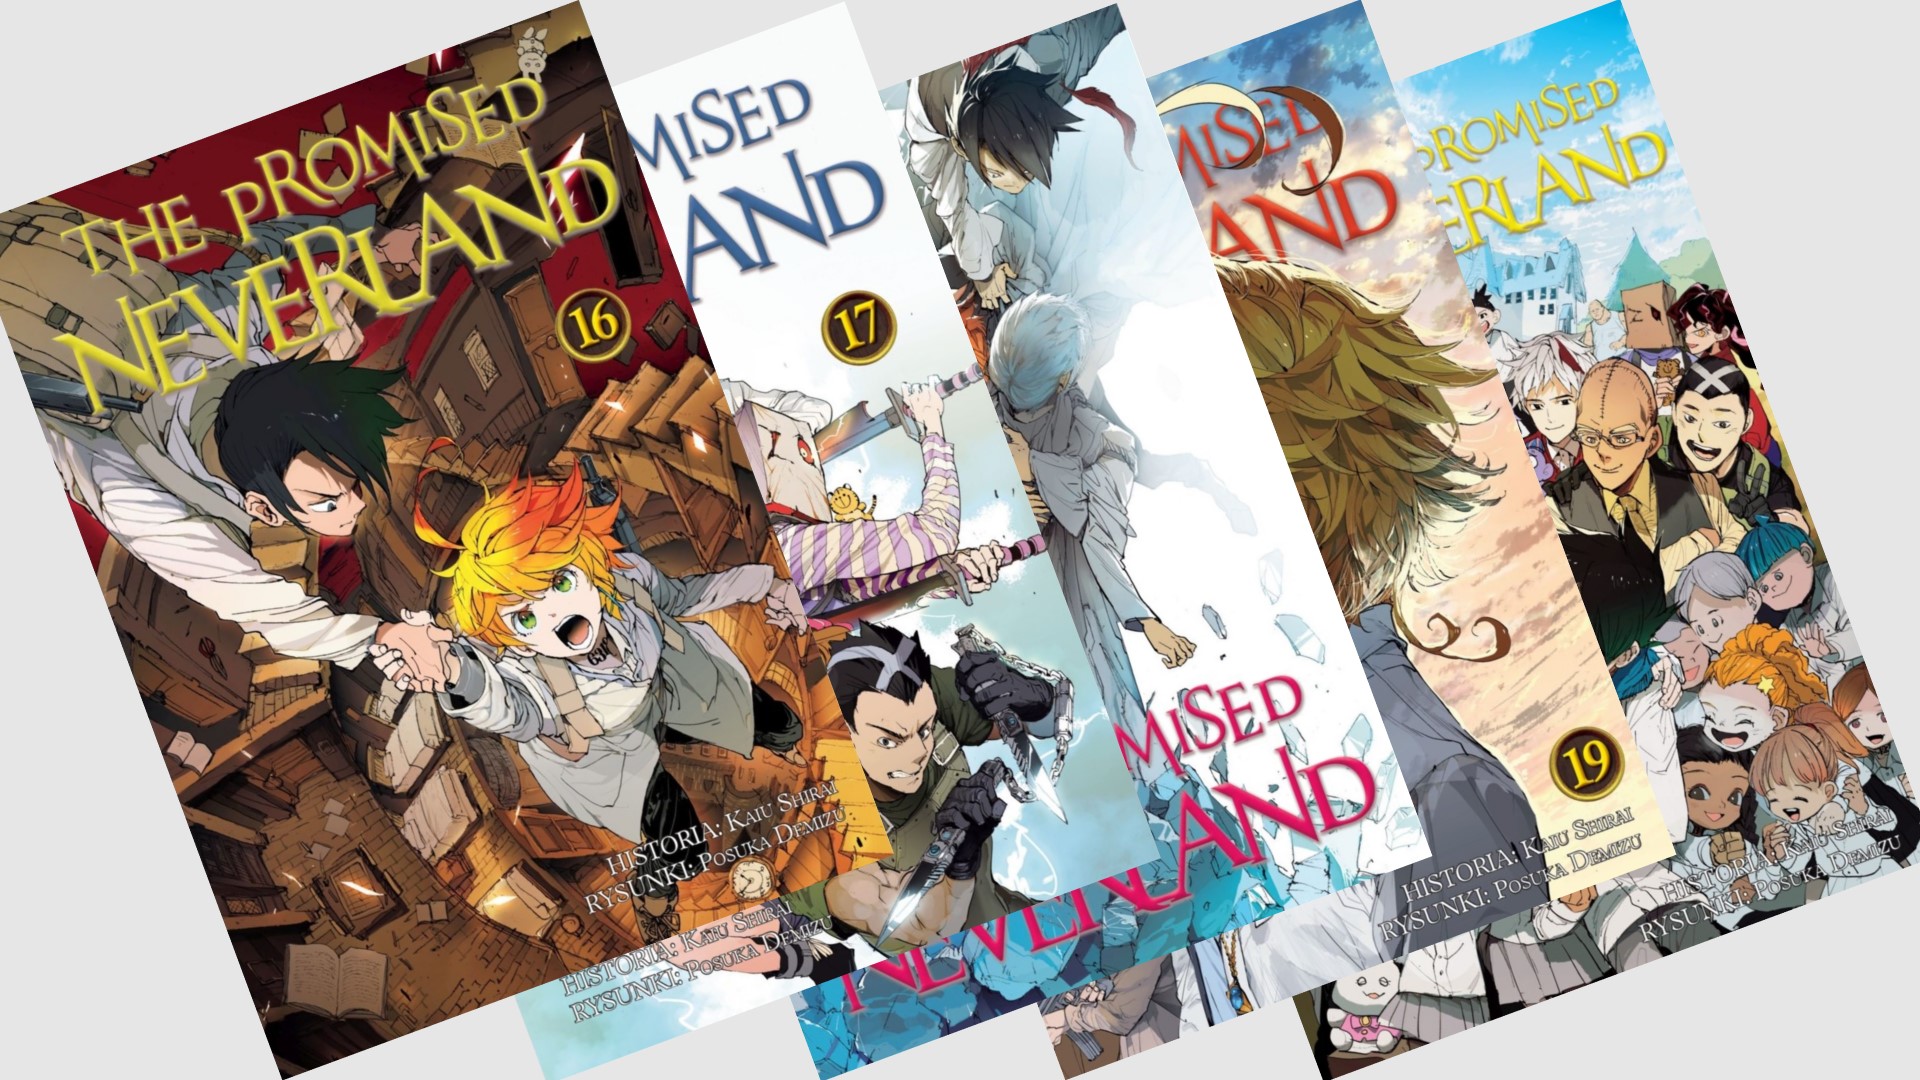 The Promised Neverland Manga 16-20 Set by Kaiu Shirai